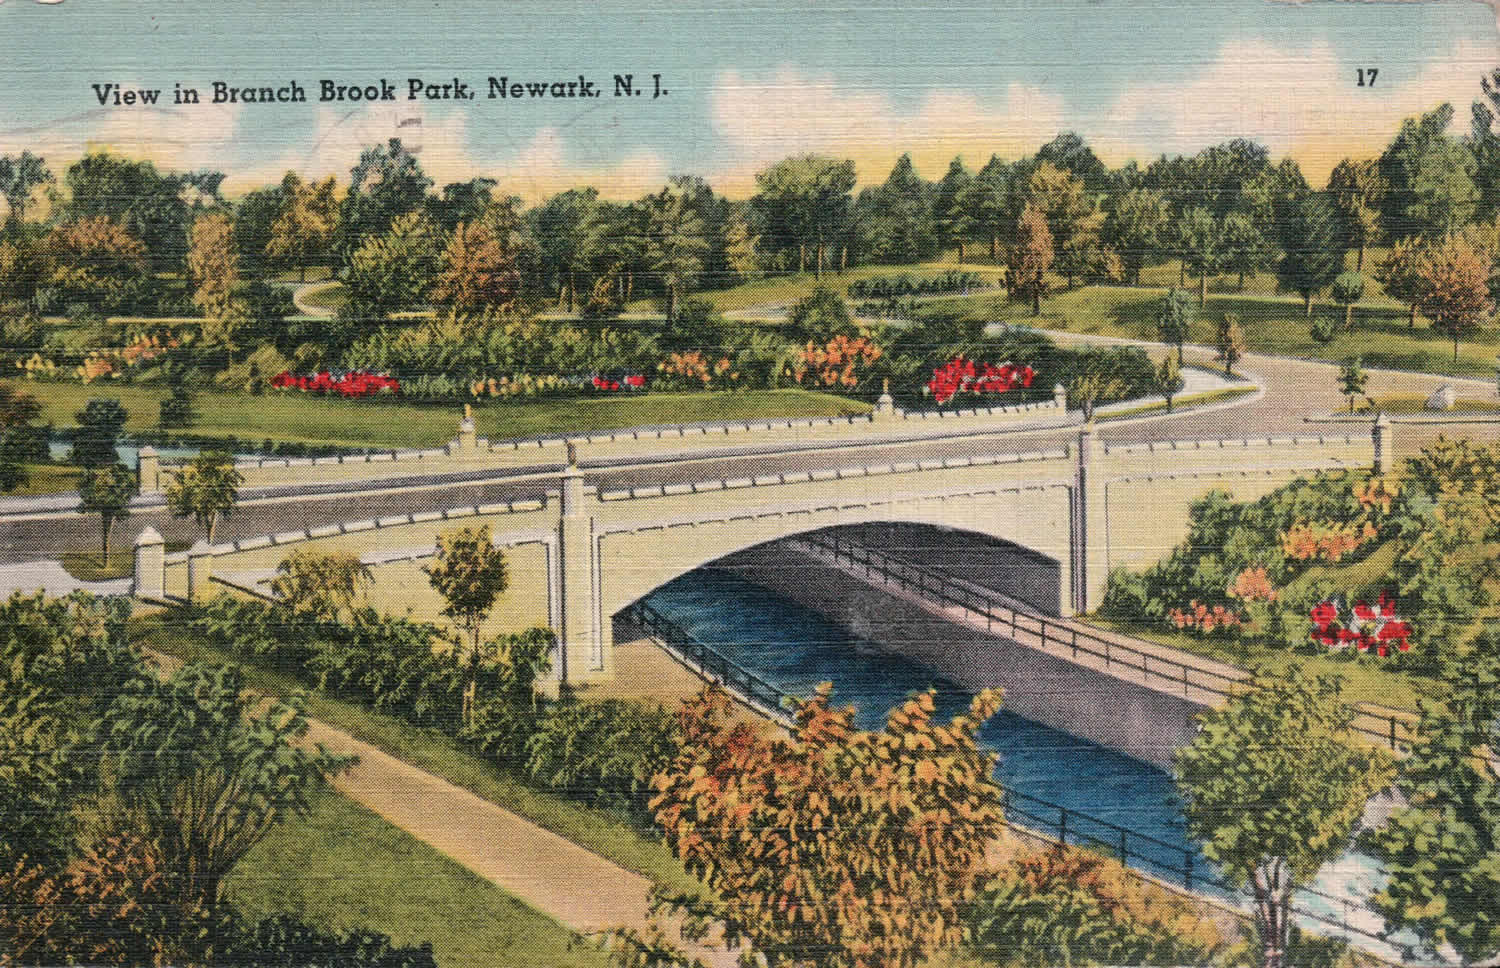 View in Branch Brook Park
Postcard
